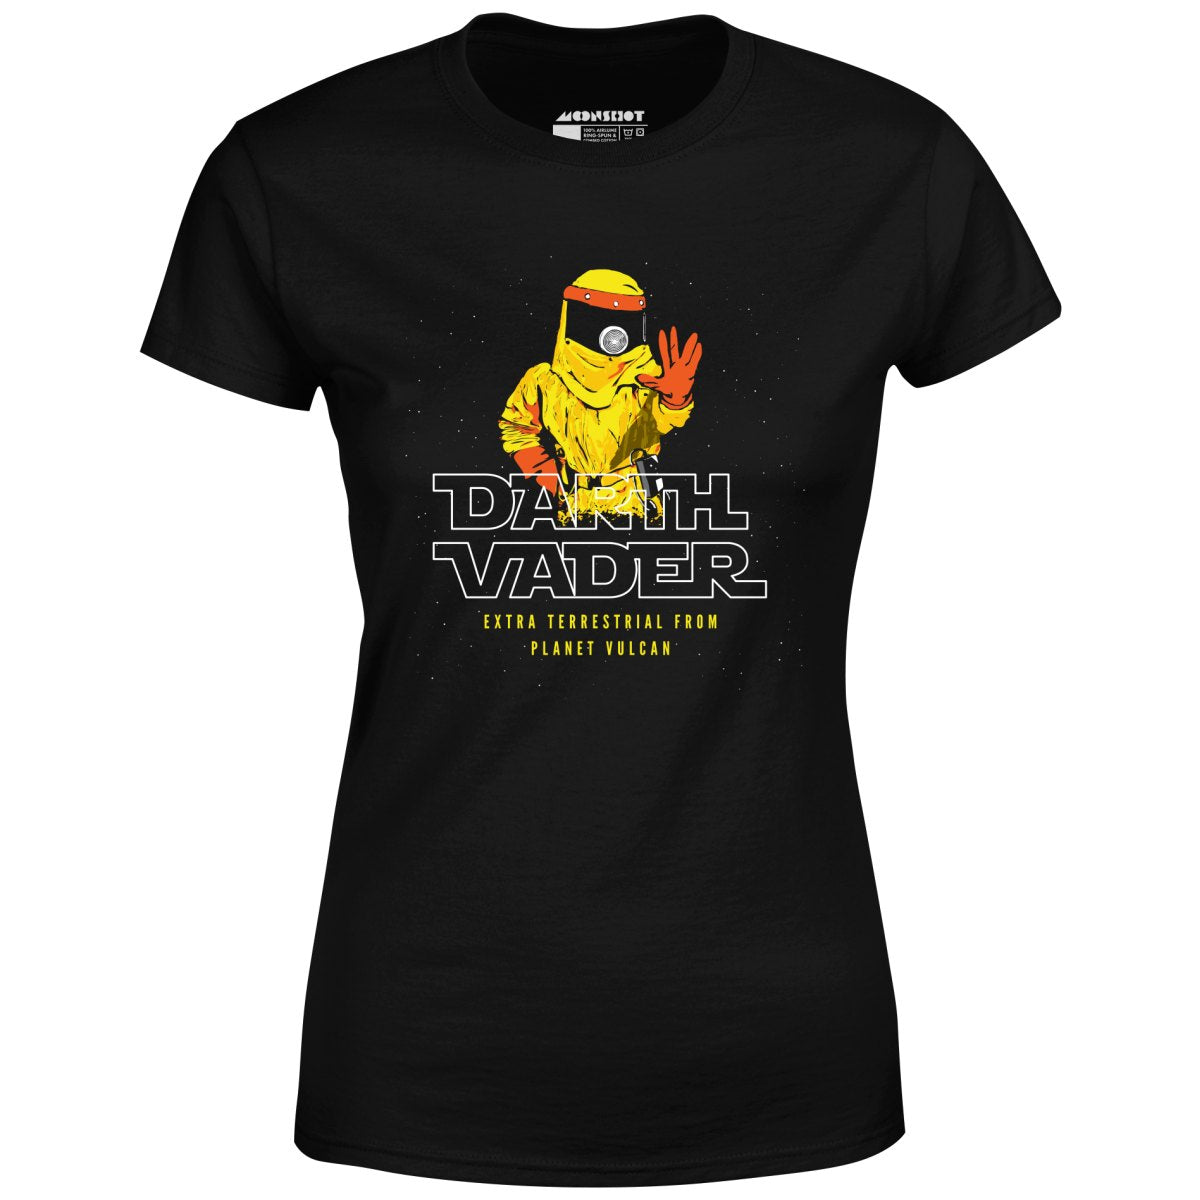 Darth Vader Planet Vulcan Parody - Women's T-Shirt